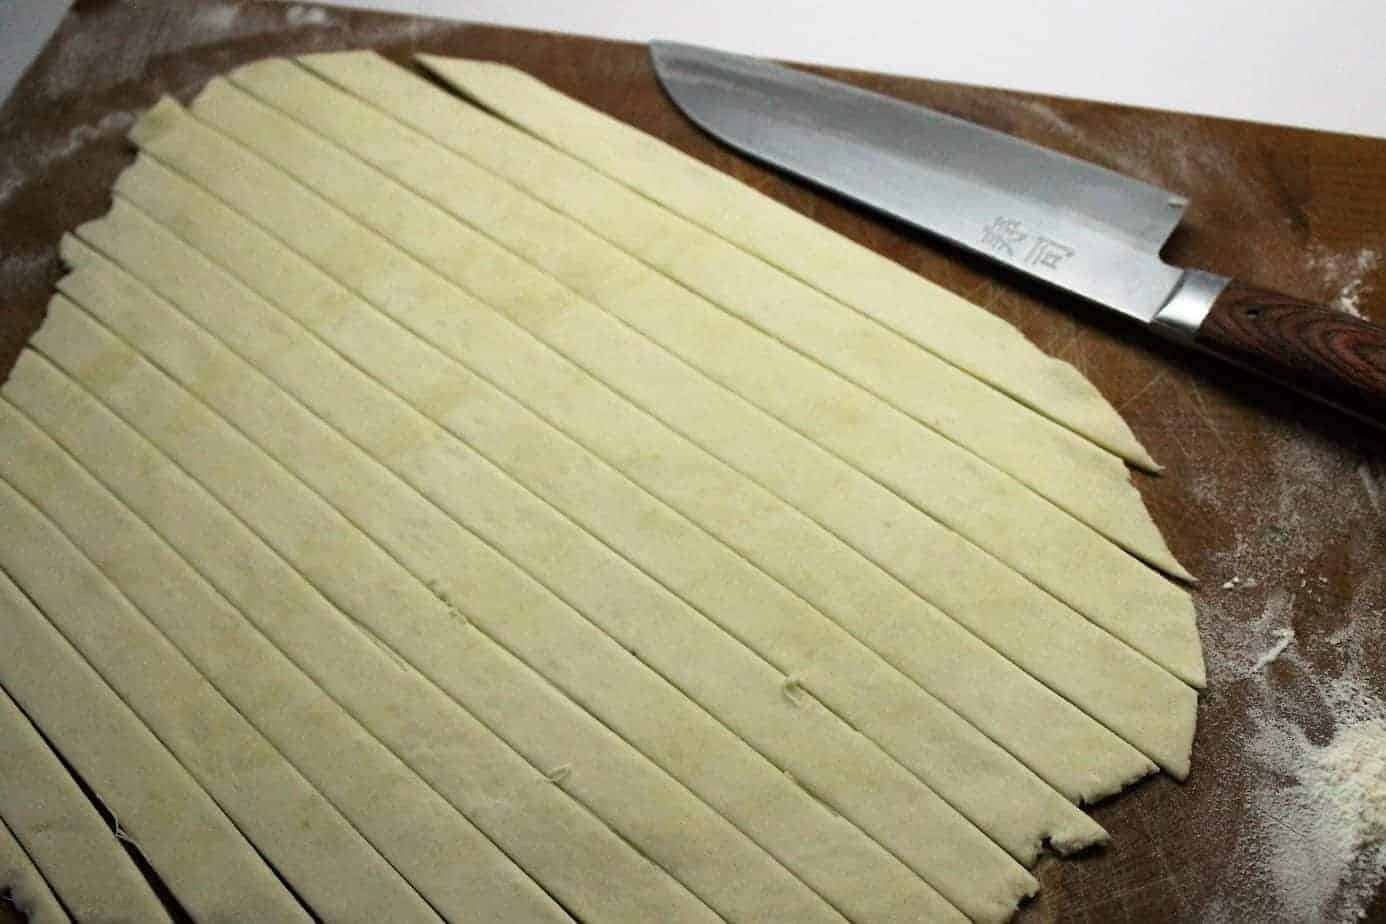 pie dough cut into strips to form a lattice top